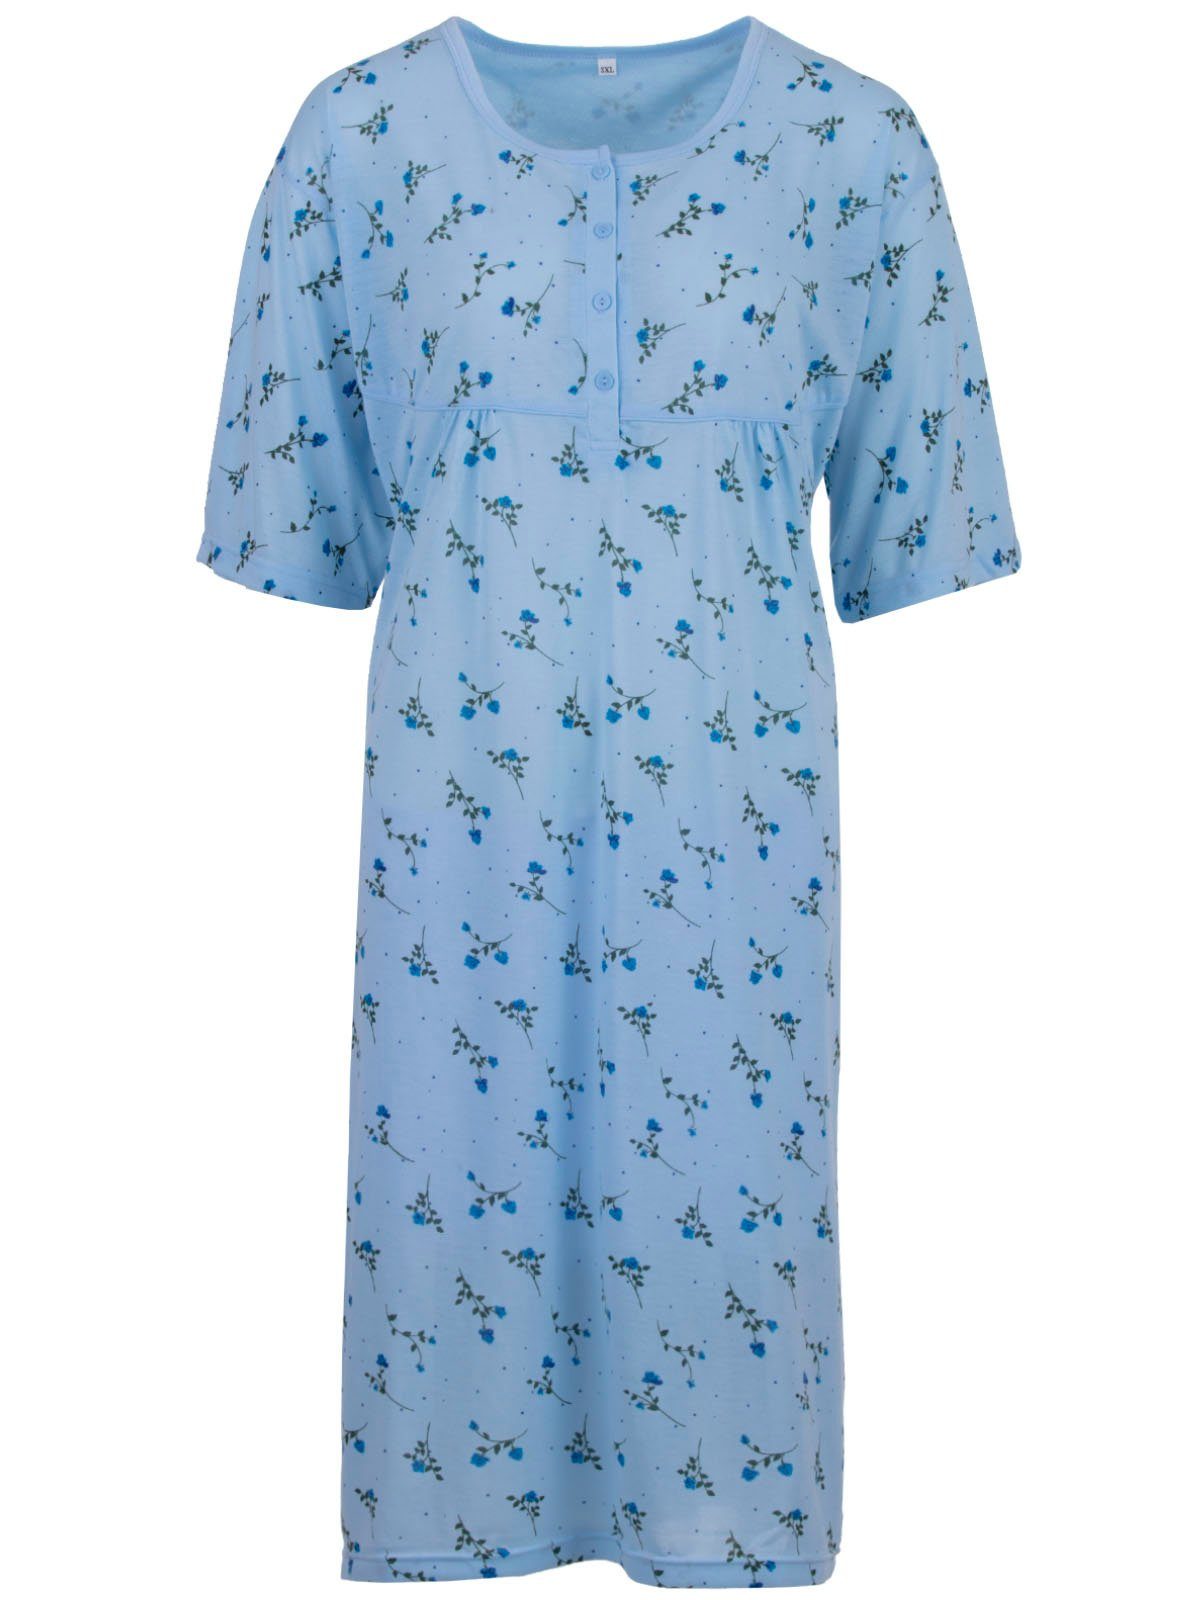 Nachthemd Nachthemd 3XL-6XL Lucky Kurzarm blau - Blumen